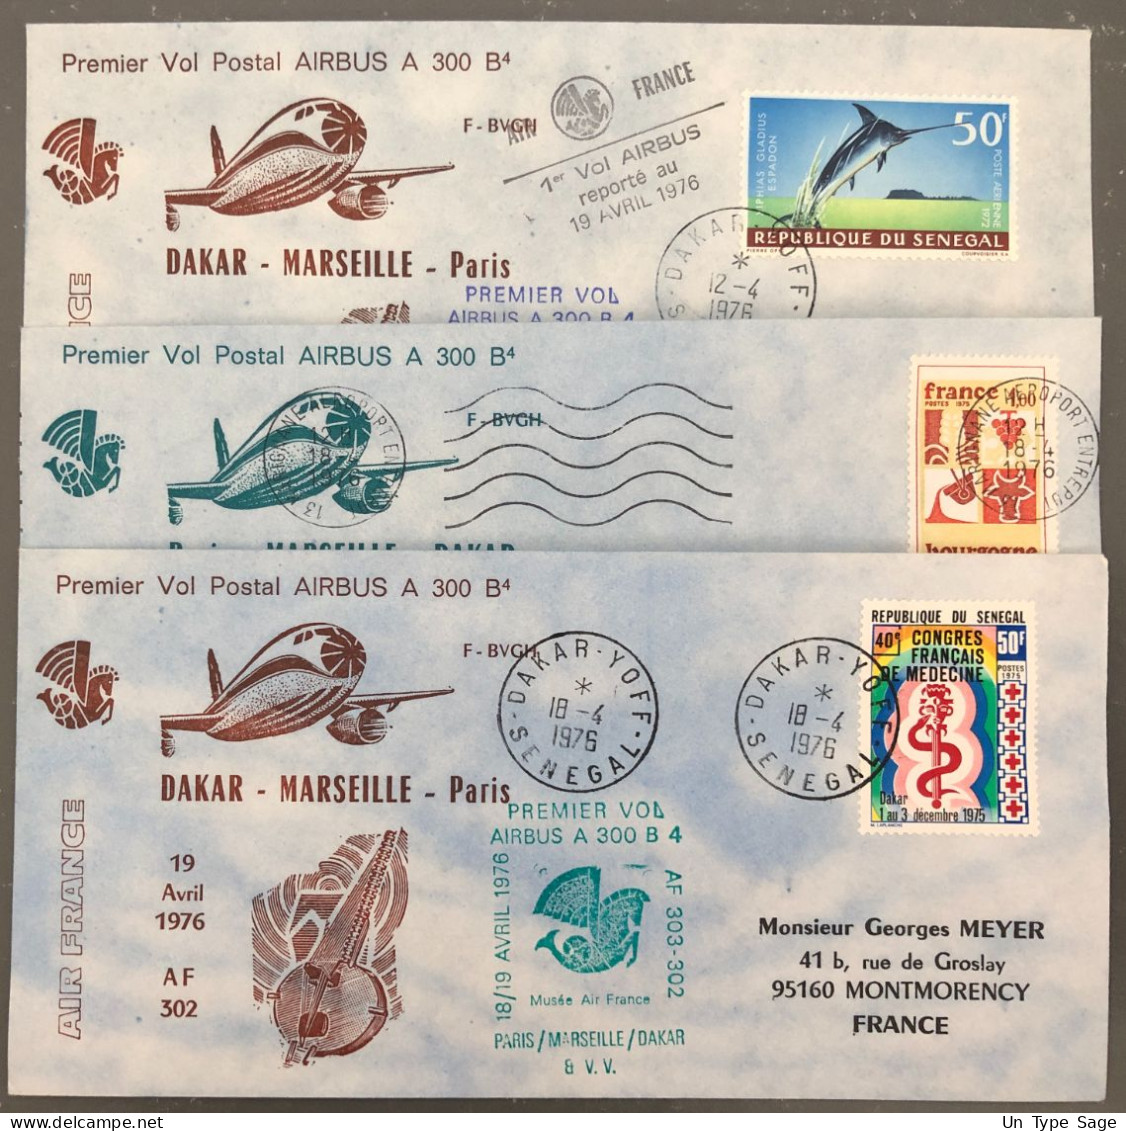 France, Premier Vol (Air France) Paris, Marseille, Dakar, 19.4.1976 - 3 Enveloppes - (B1499) - First Flight Covers